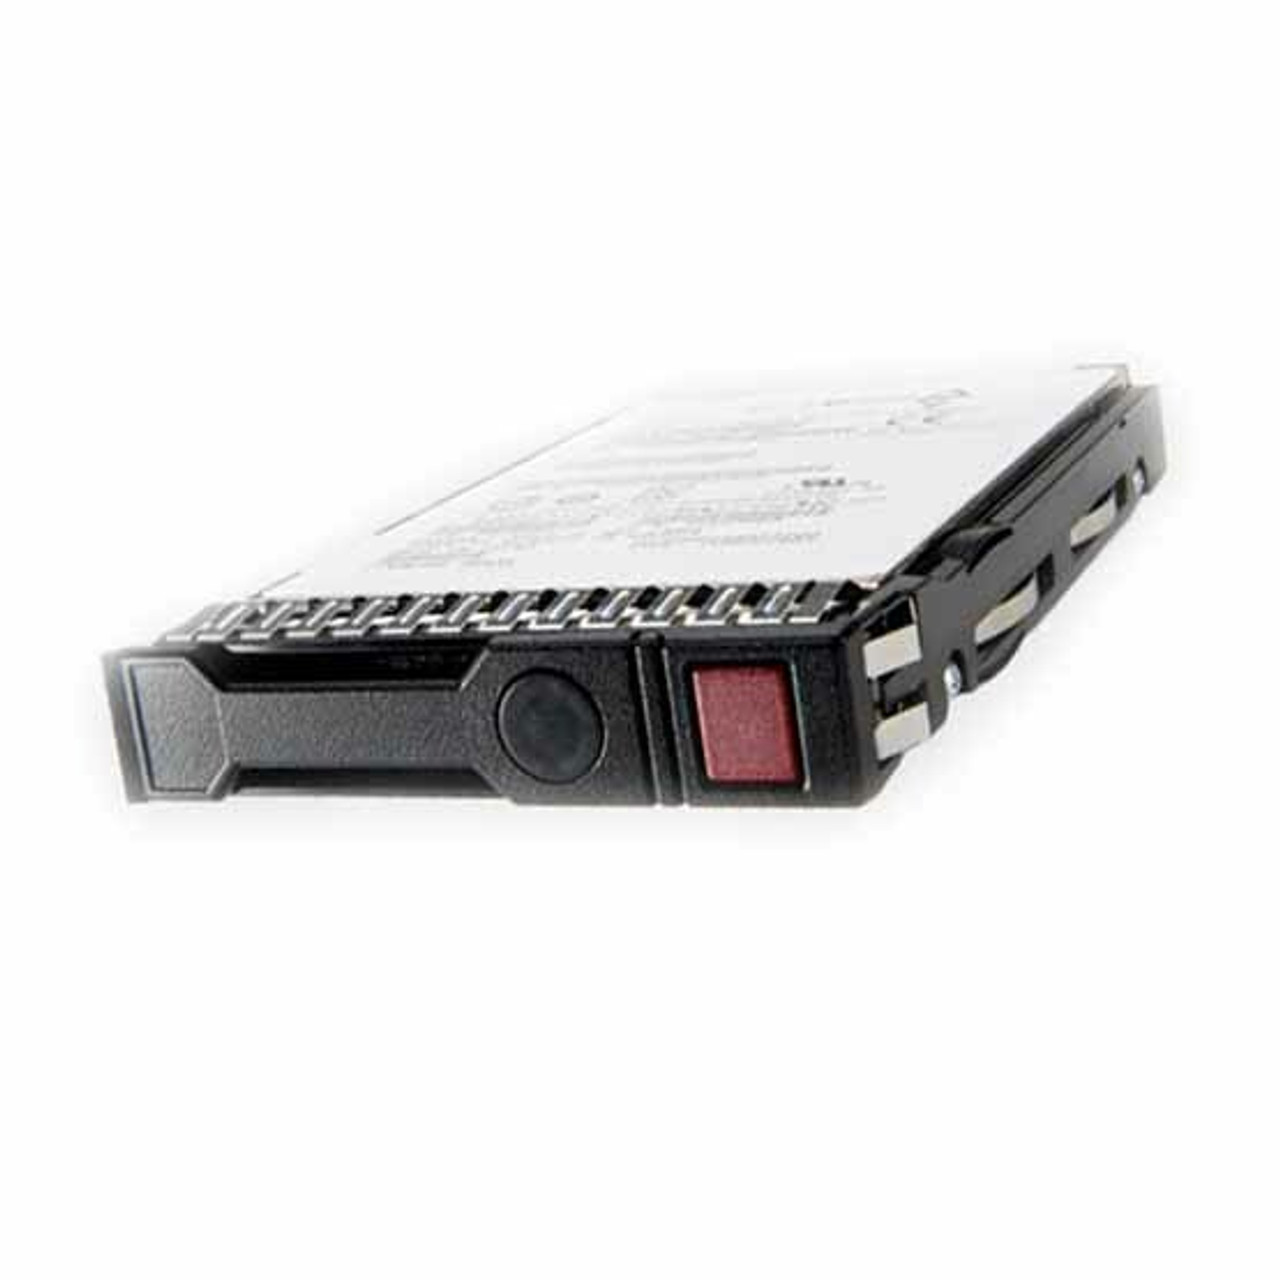 HPE MSA 2040 HDD 6G 7.2K SAS SFF Midline MDL